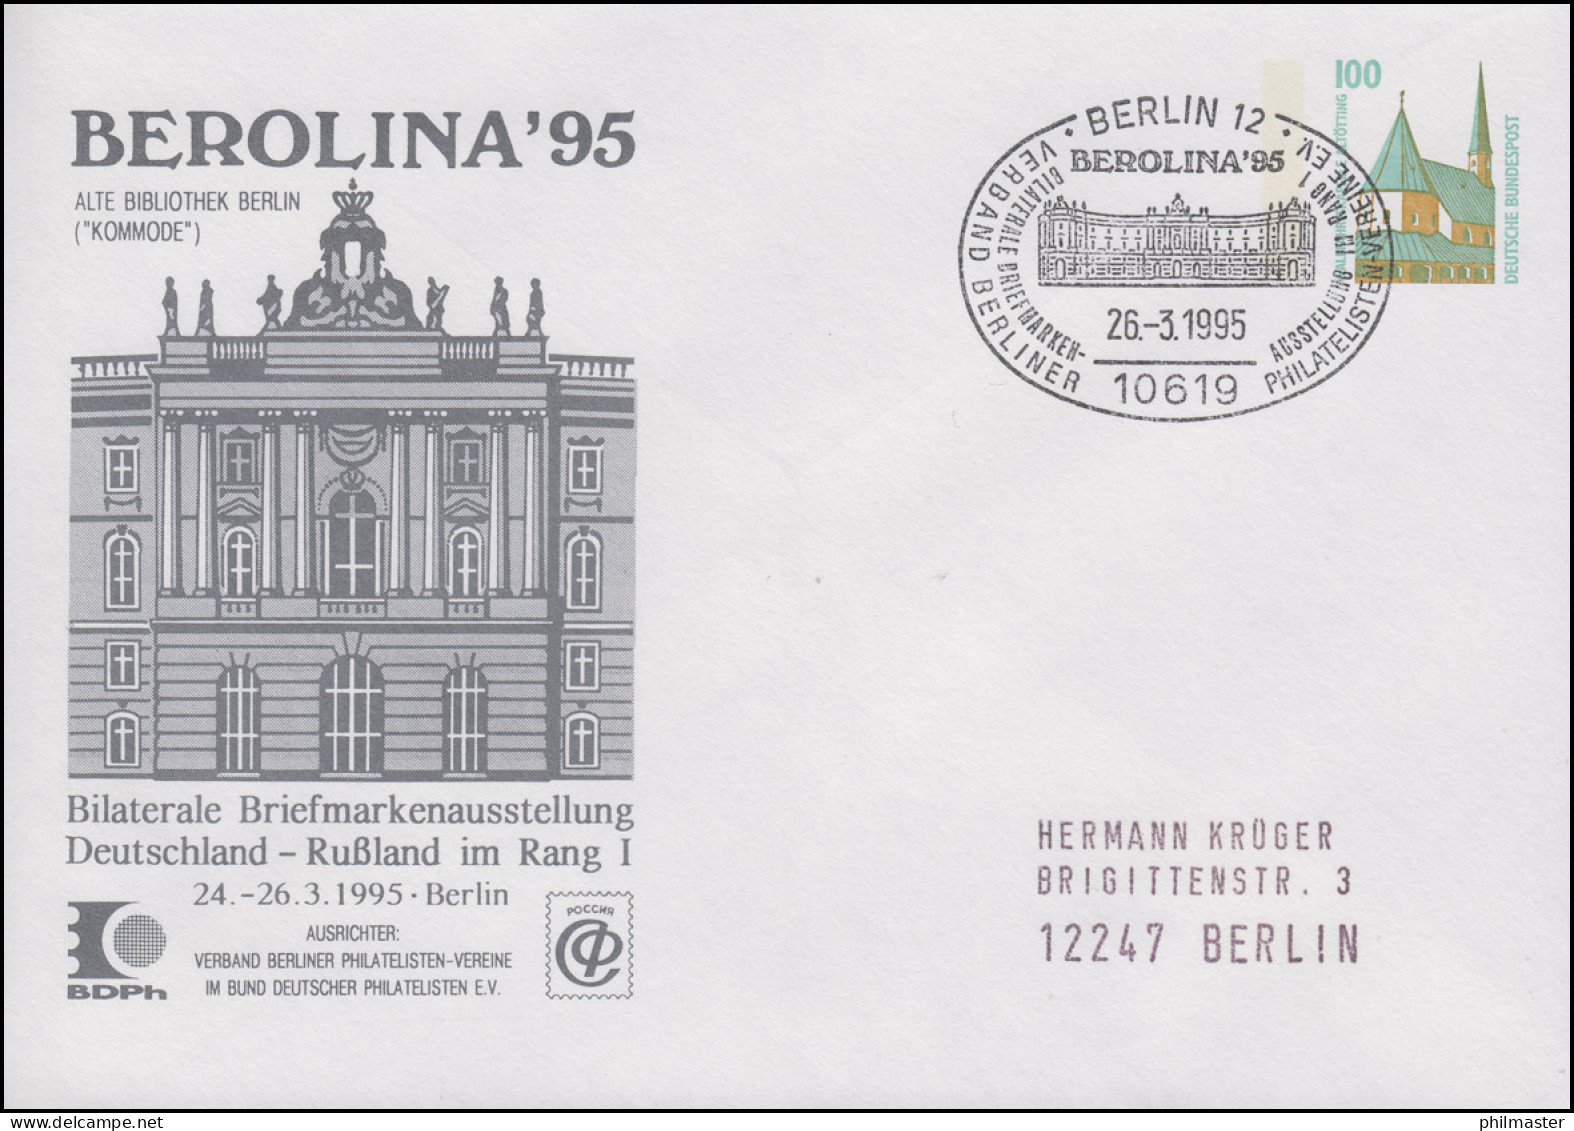 PU 290 BEROLINA Deutschland - Russland, SSt Berlin Alte Bibliothek 26.3.1995 - Private Covers - Mint